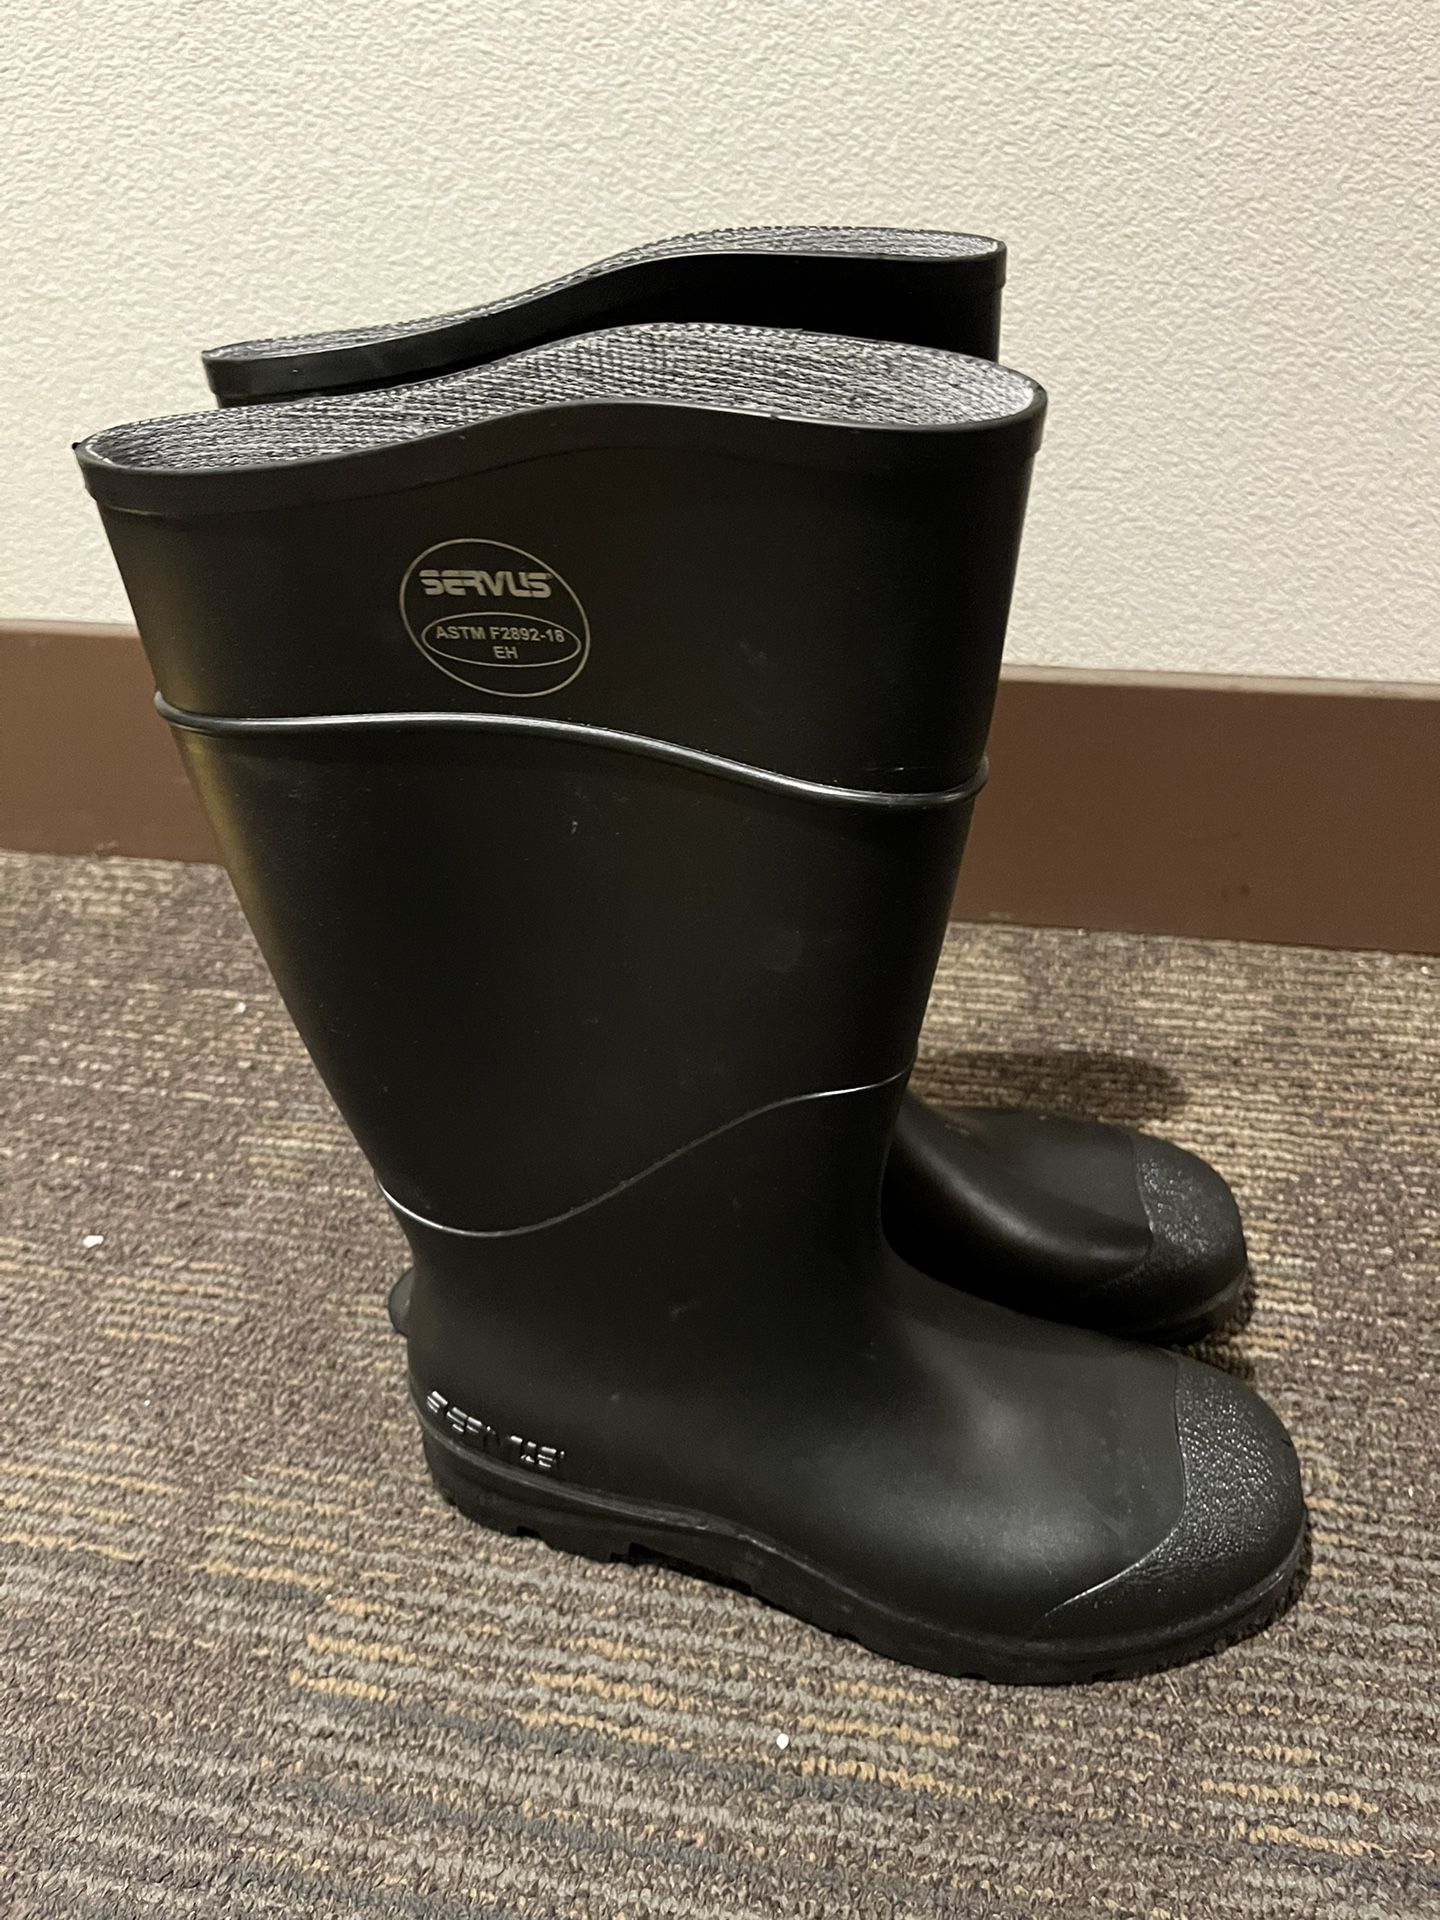 Serves Rain Boots 10/10